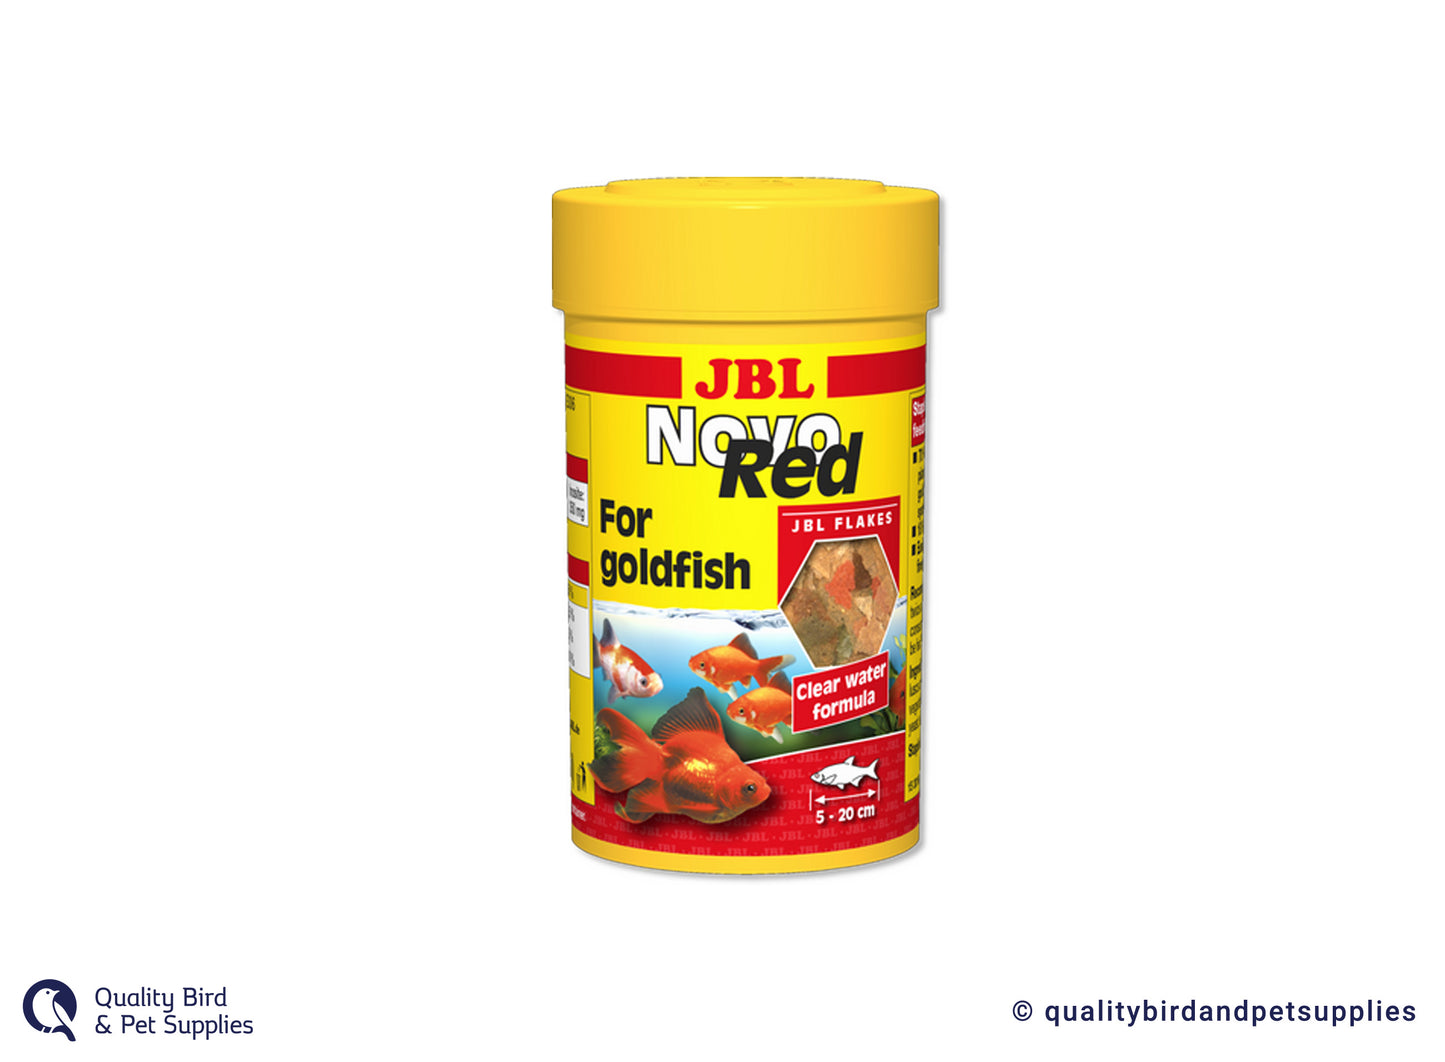 JBL NovoRed for Goldfish